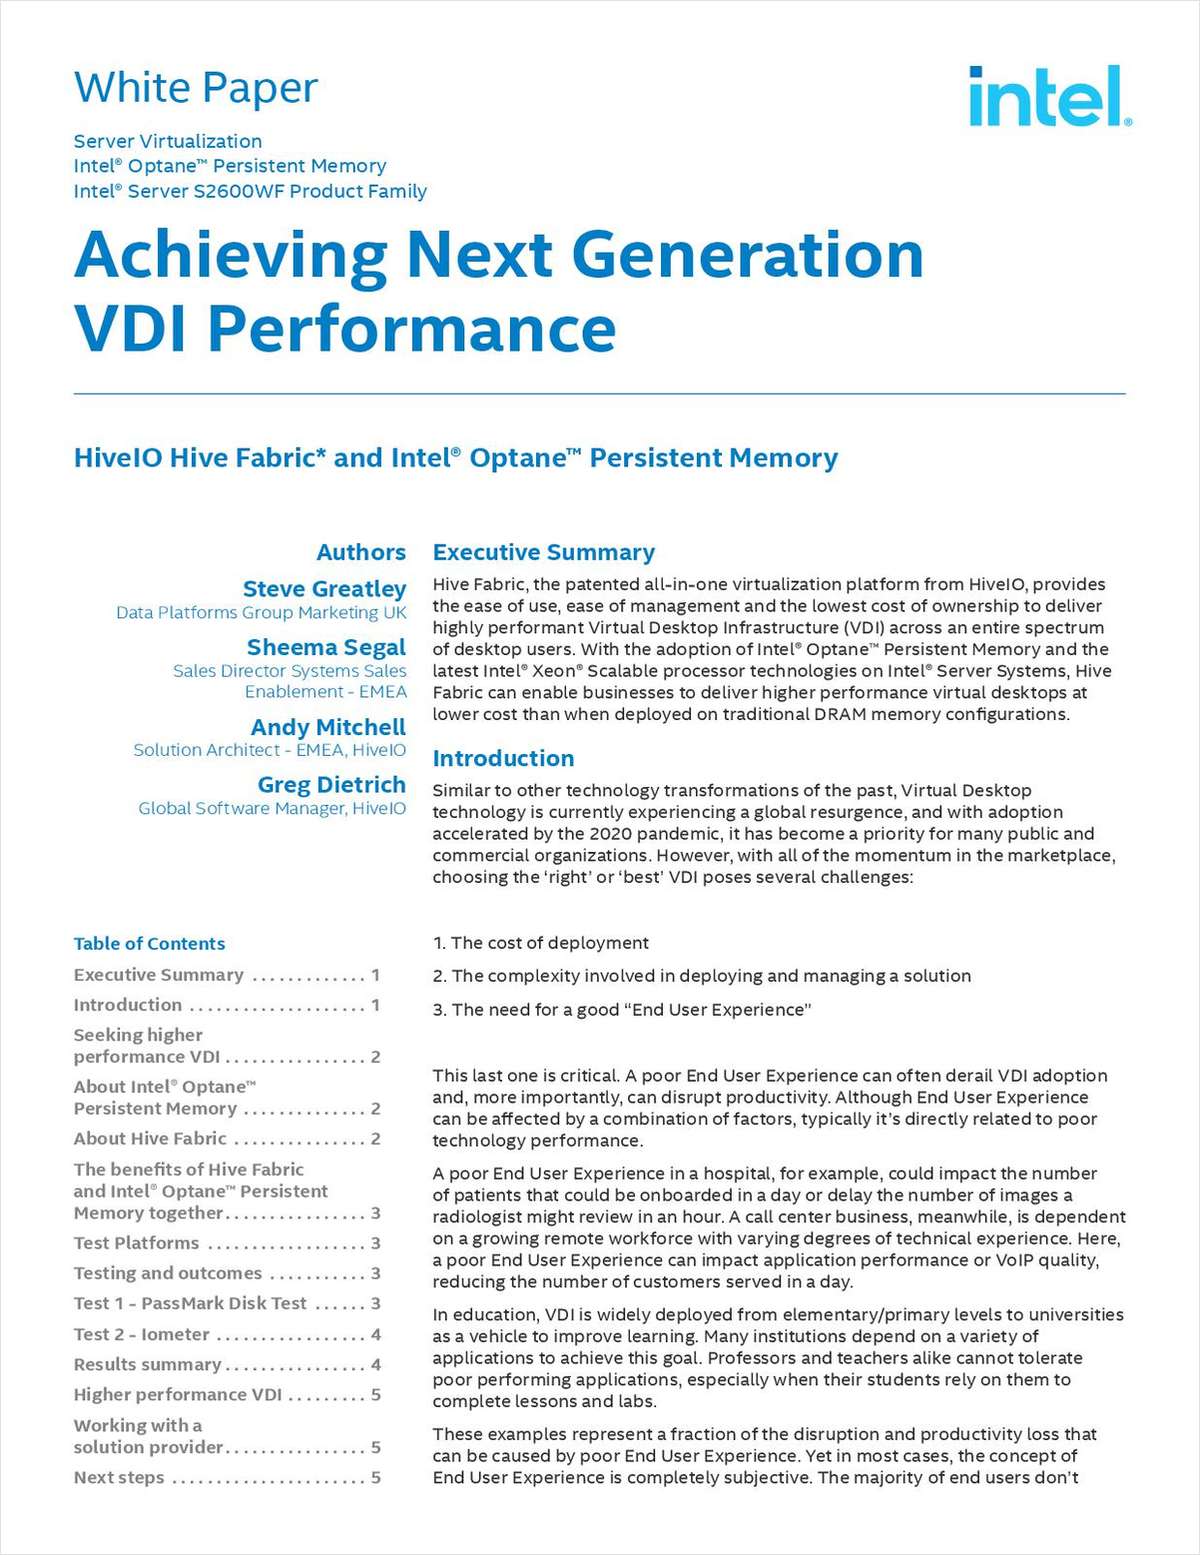 Achieving Next Generation VDI Performance